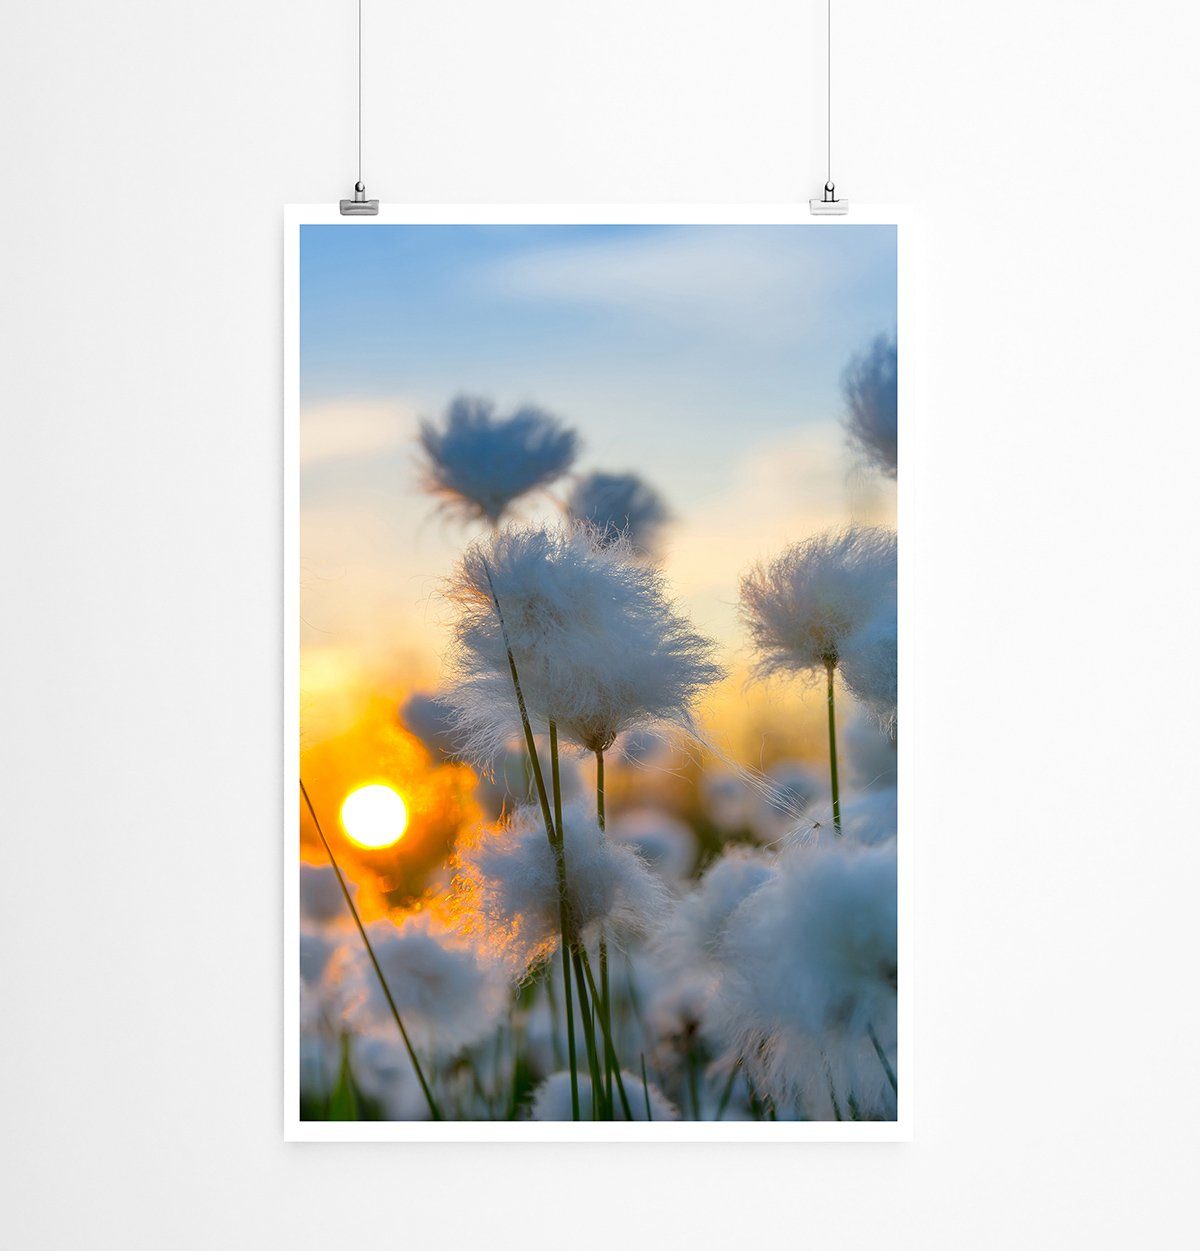 Sinus Art Poster 90x60cm Poster Naturfotografie Baumwollpflanzen bei Sonnenaufgang